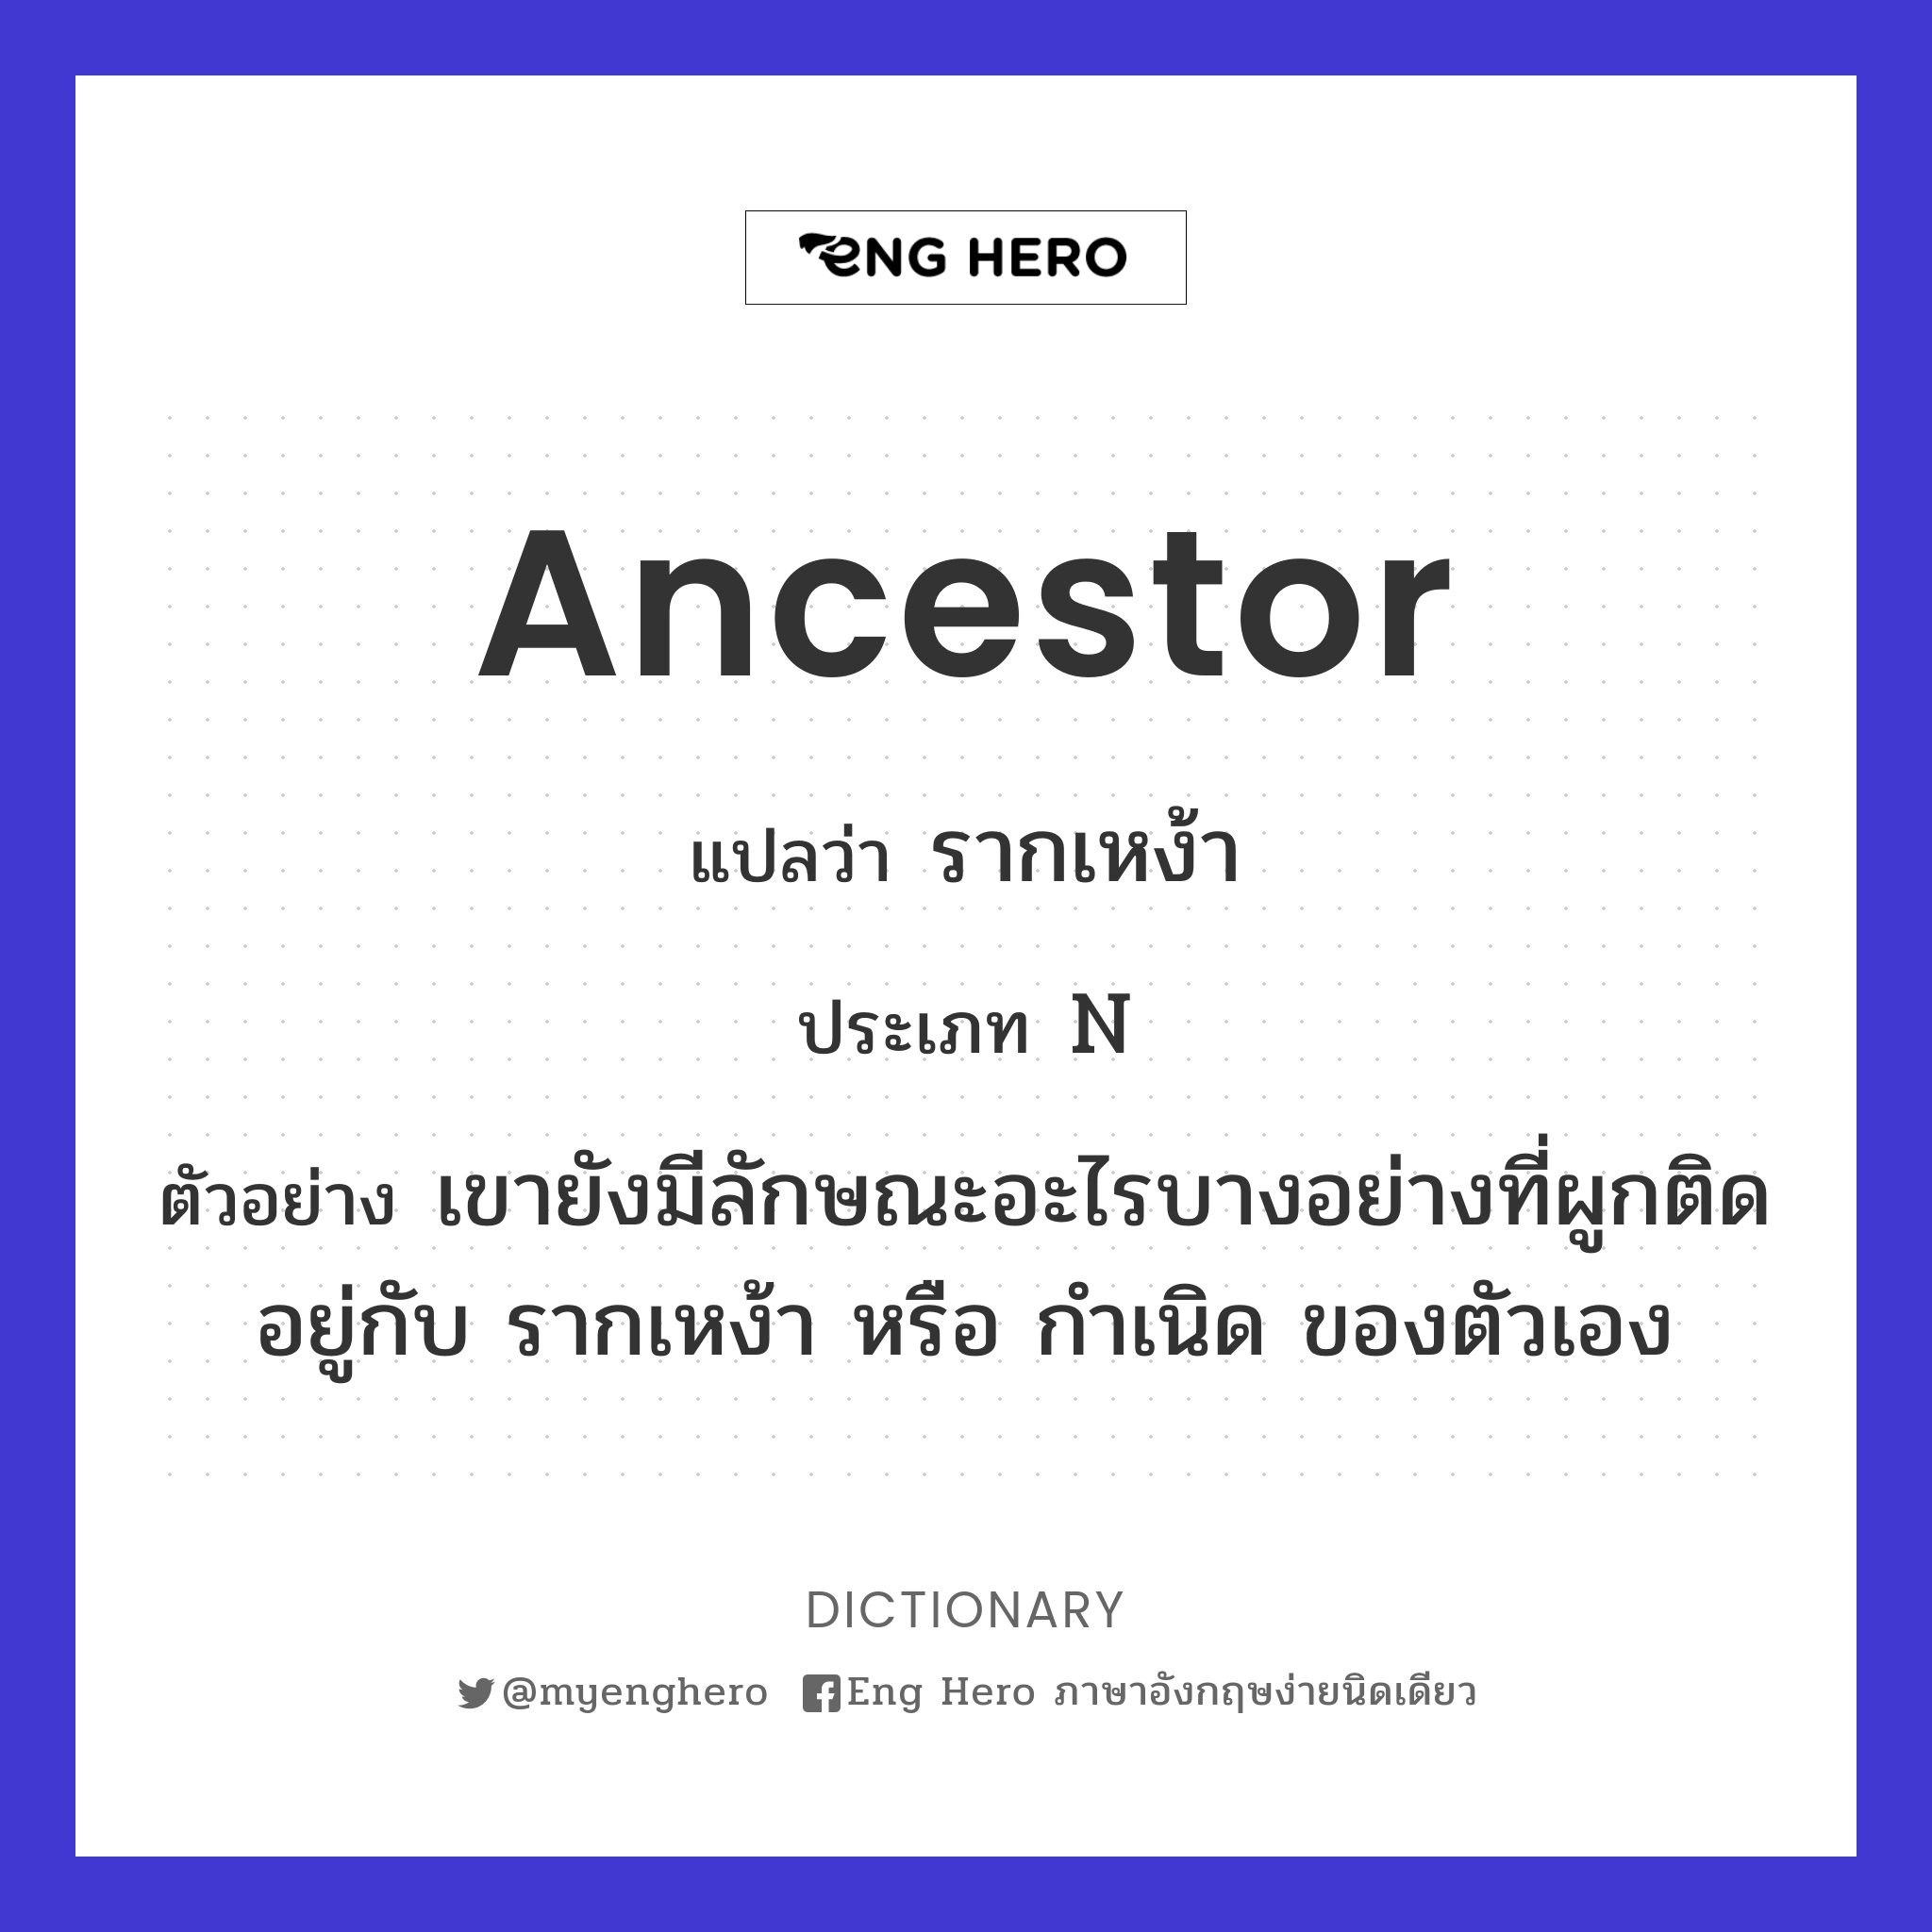 ancestor